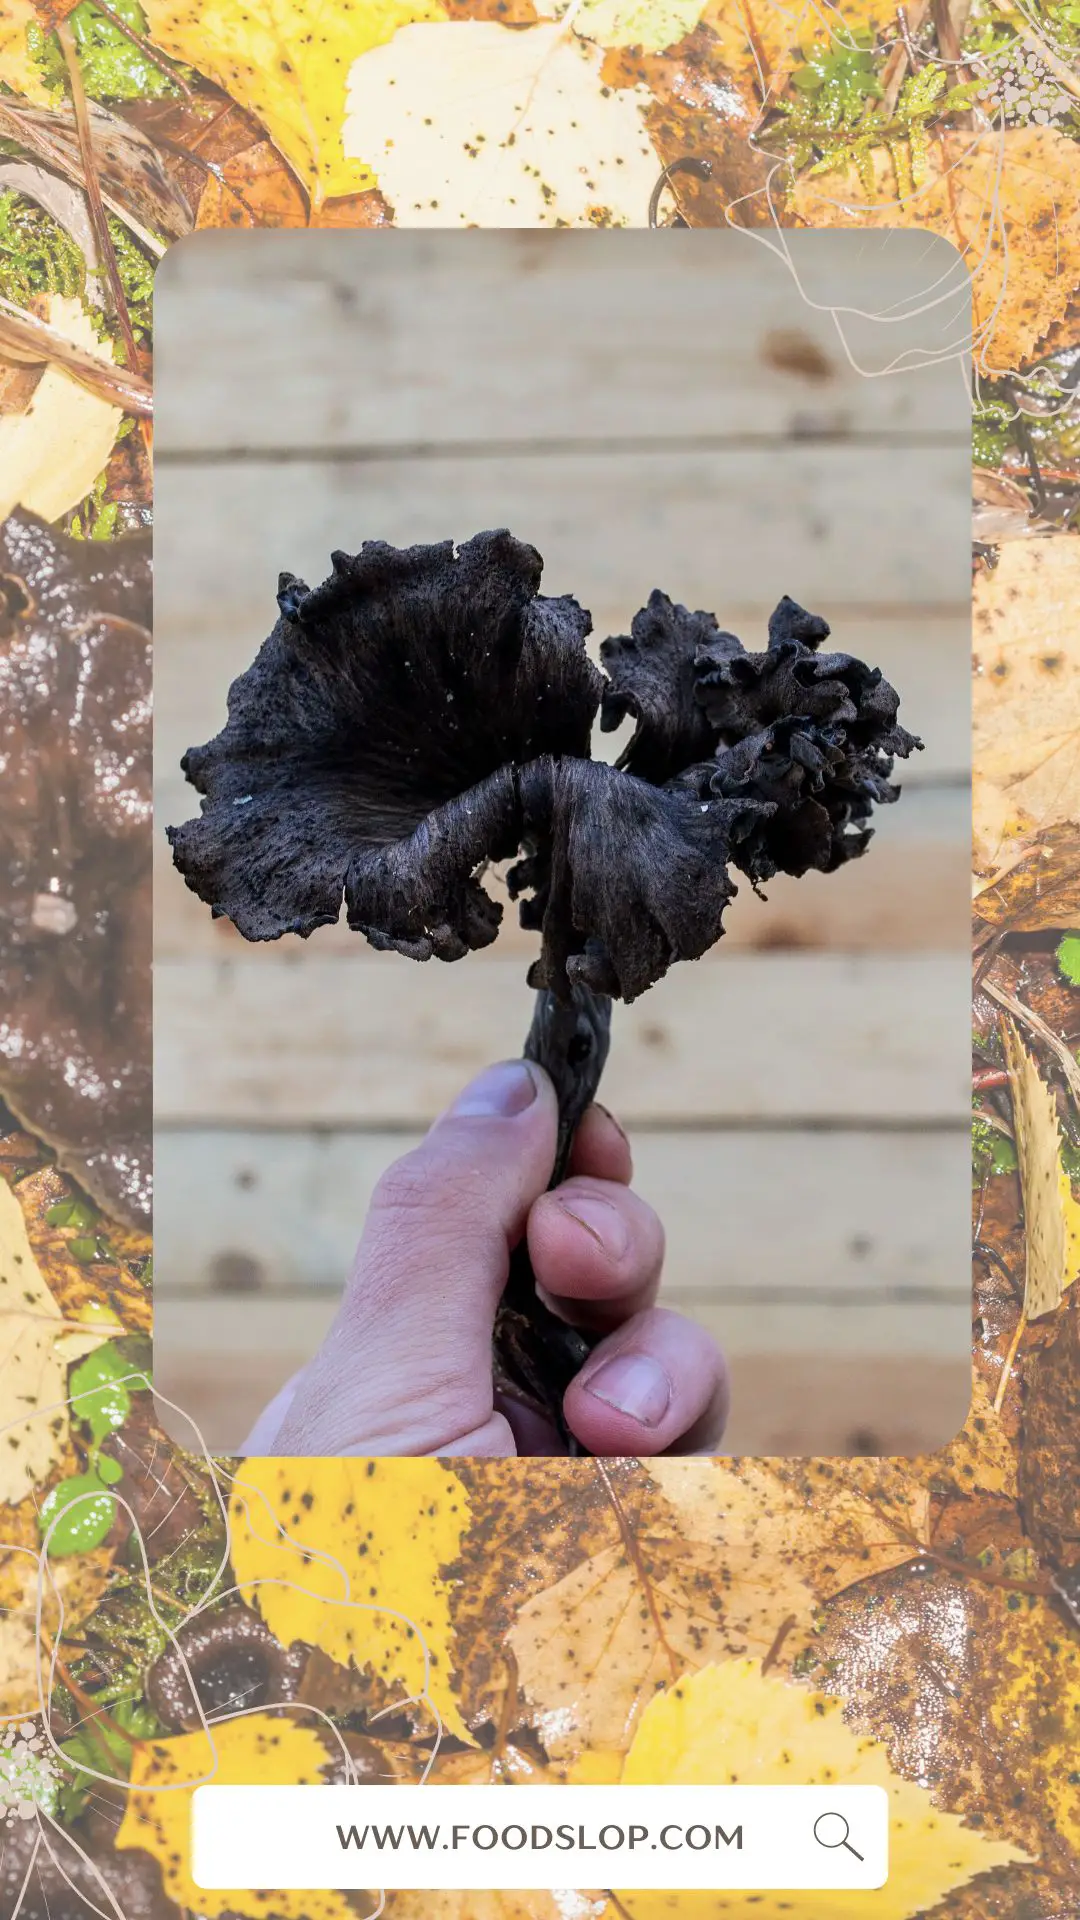 Why Am I Craving Black Trumpet Mushrooms